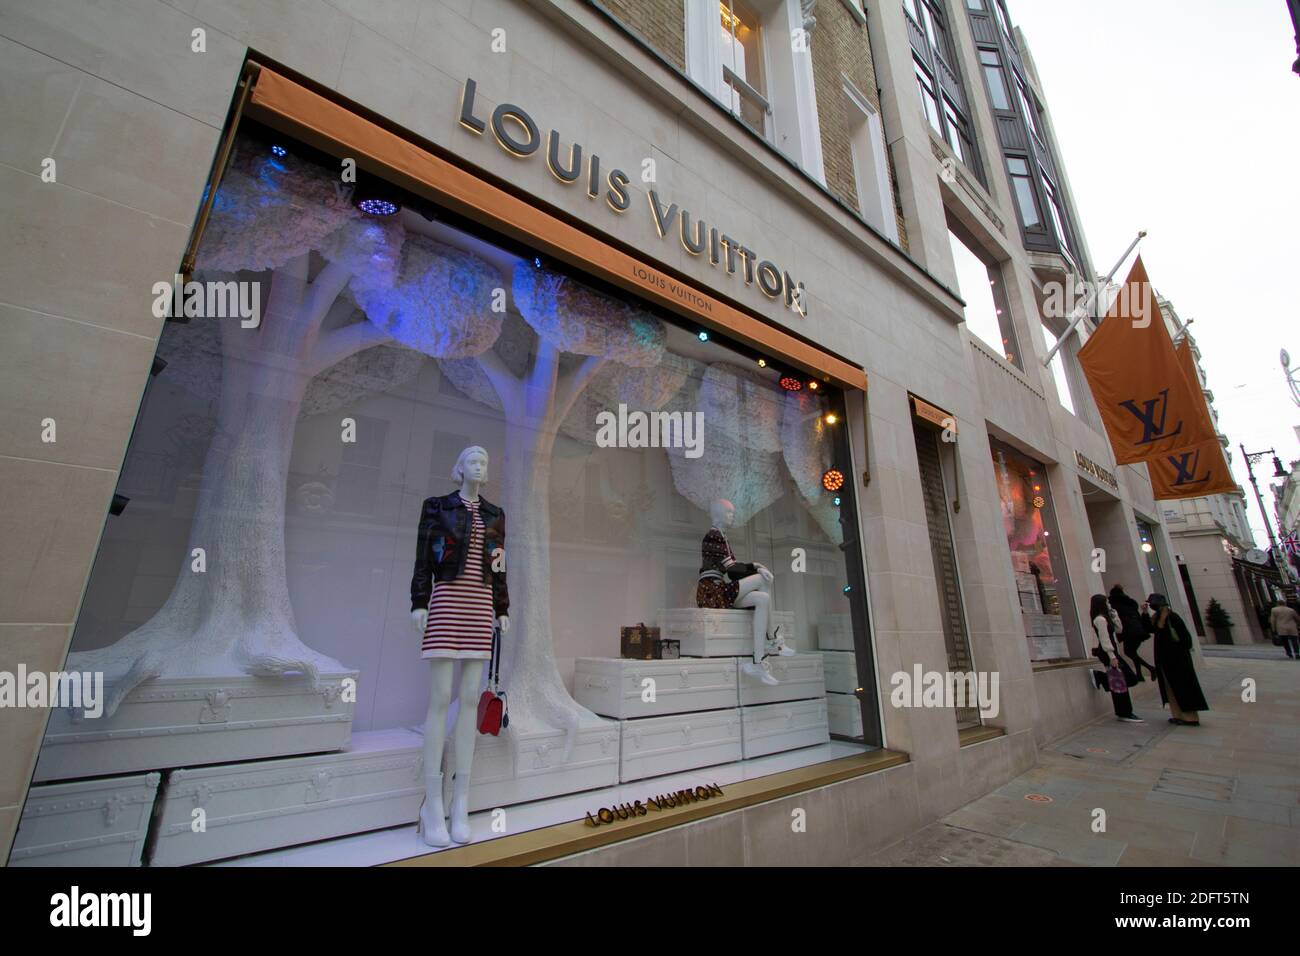 Louis Vuitton, Shop retail outlet Mayfair London Stock Photo Alamy